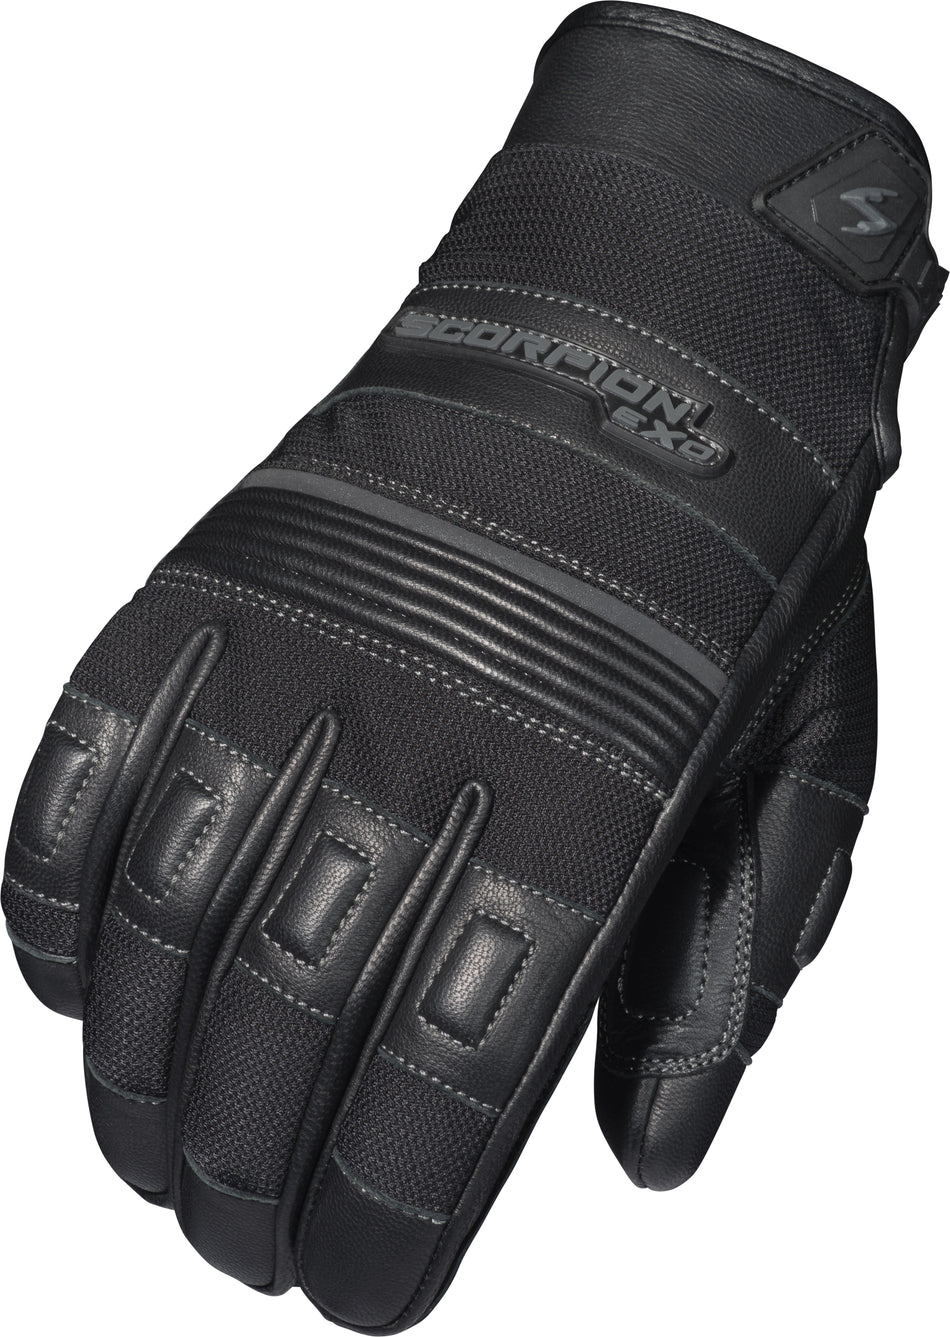 SCORPION EXO Abrams Gloves Black 2x G35-037